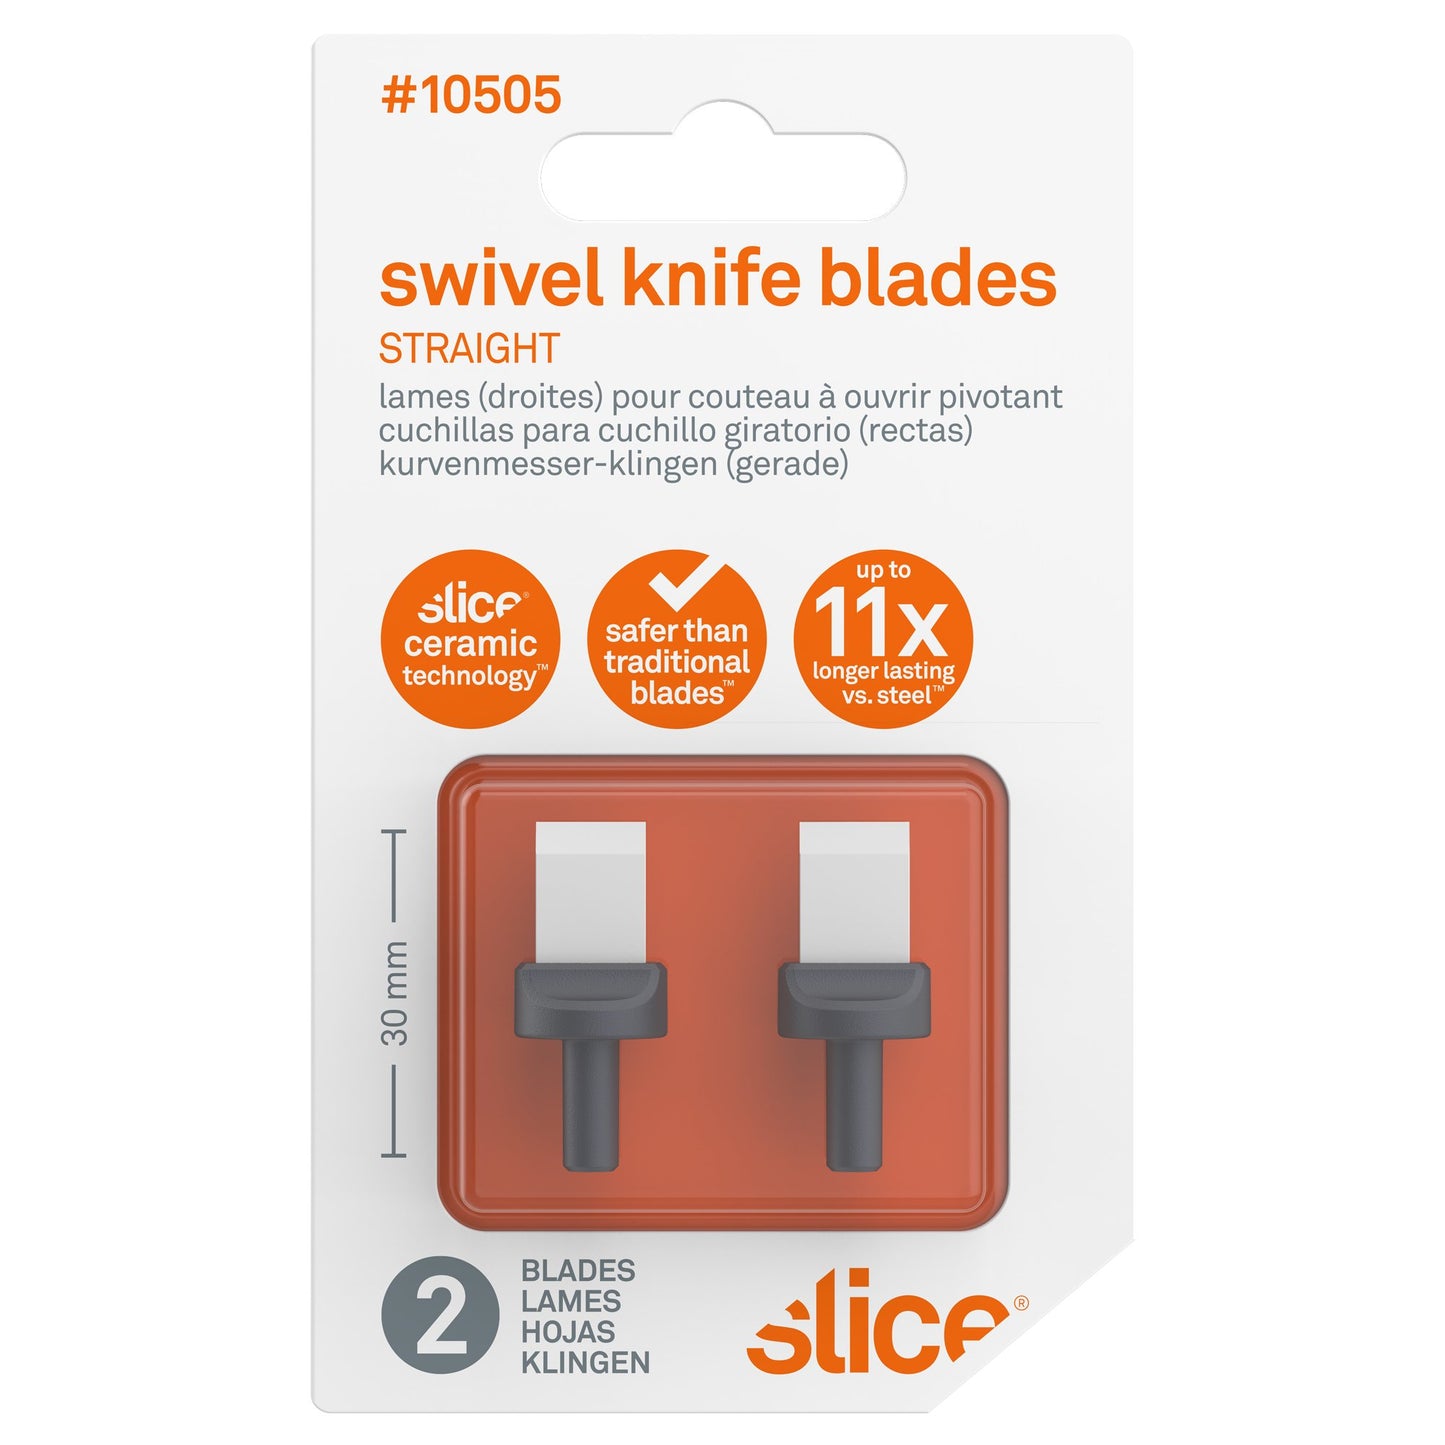 Swivel Knife Blades